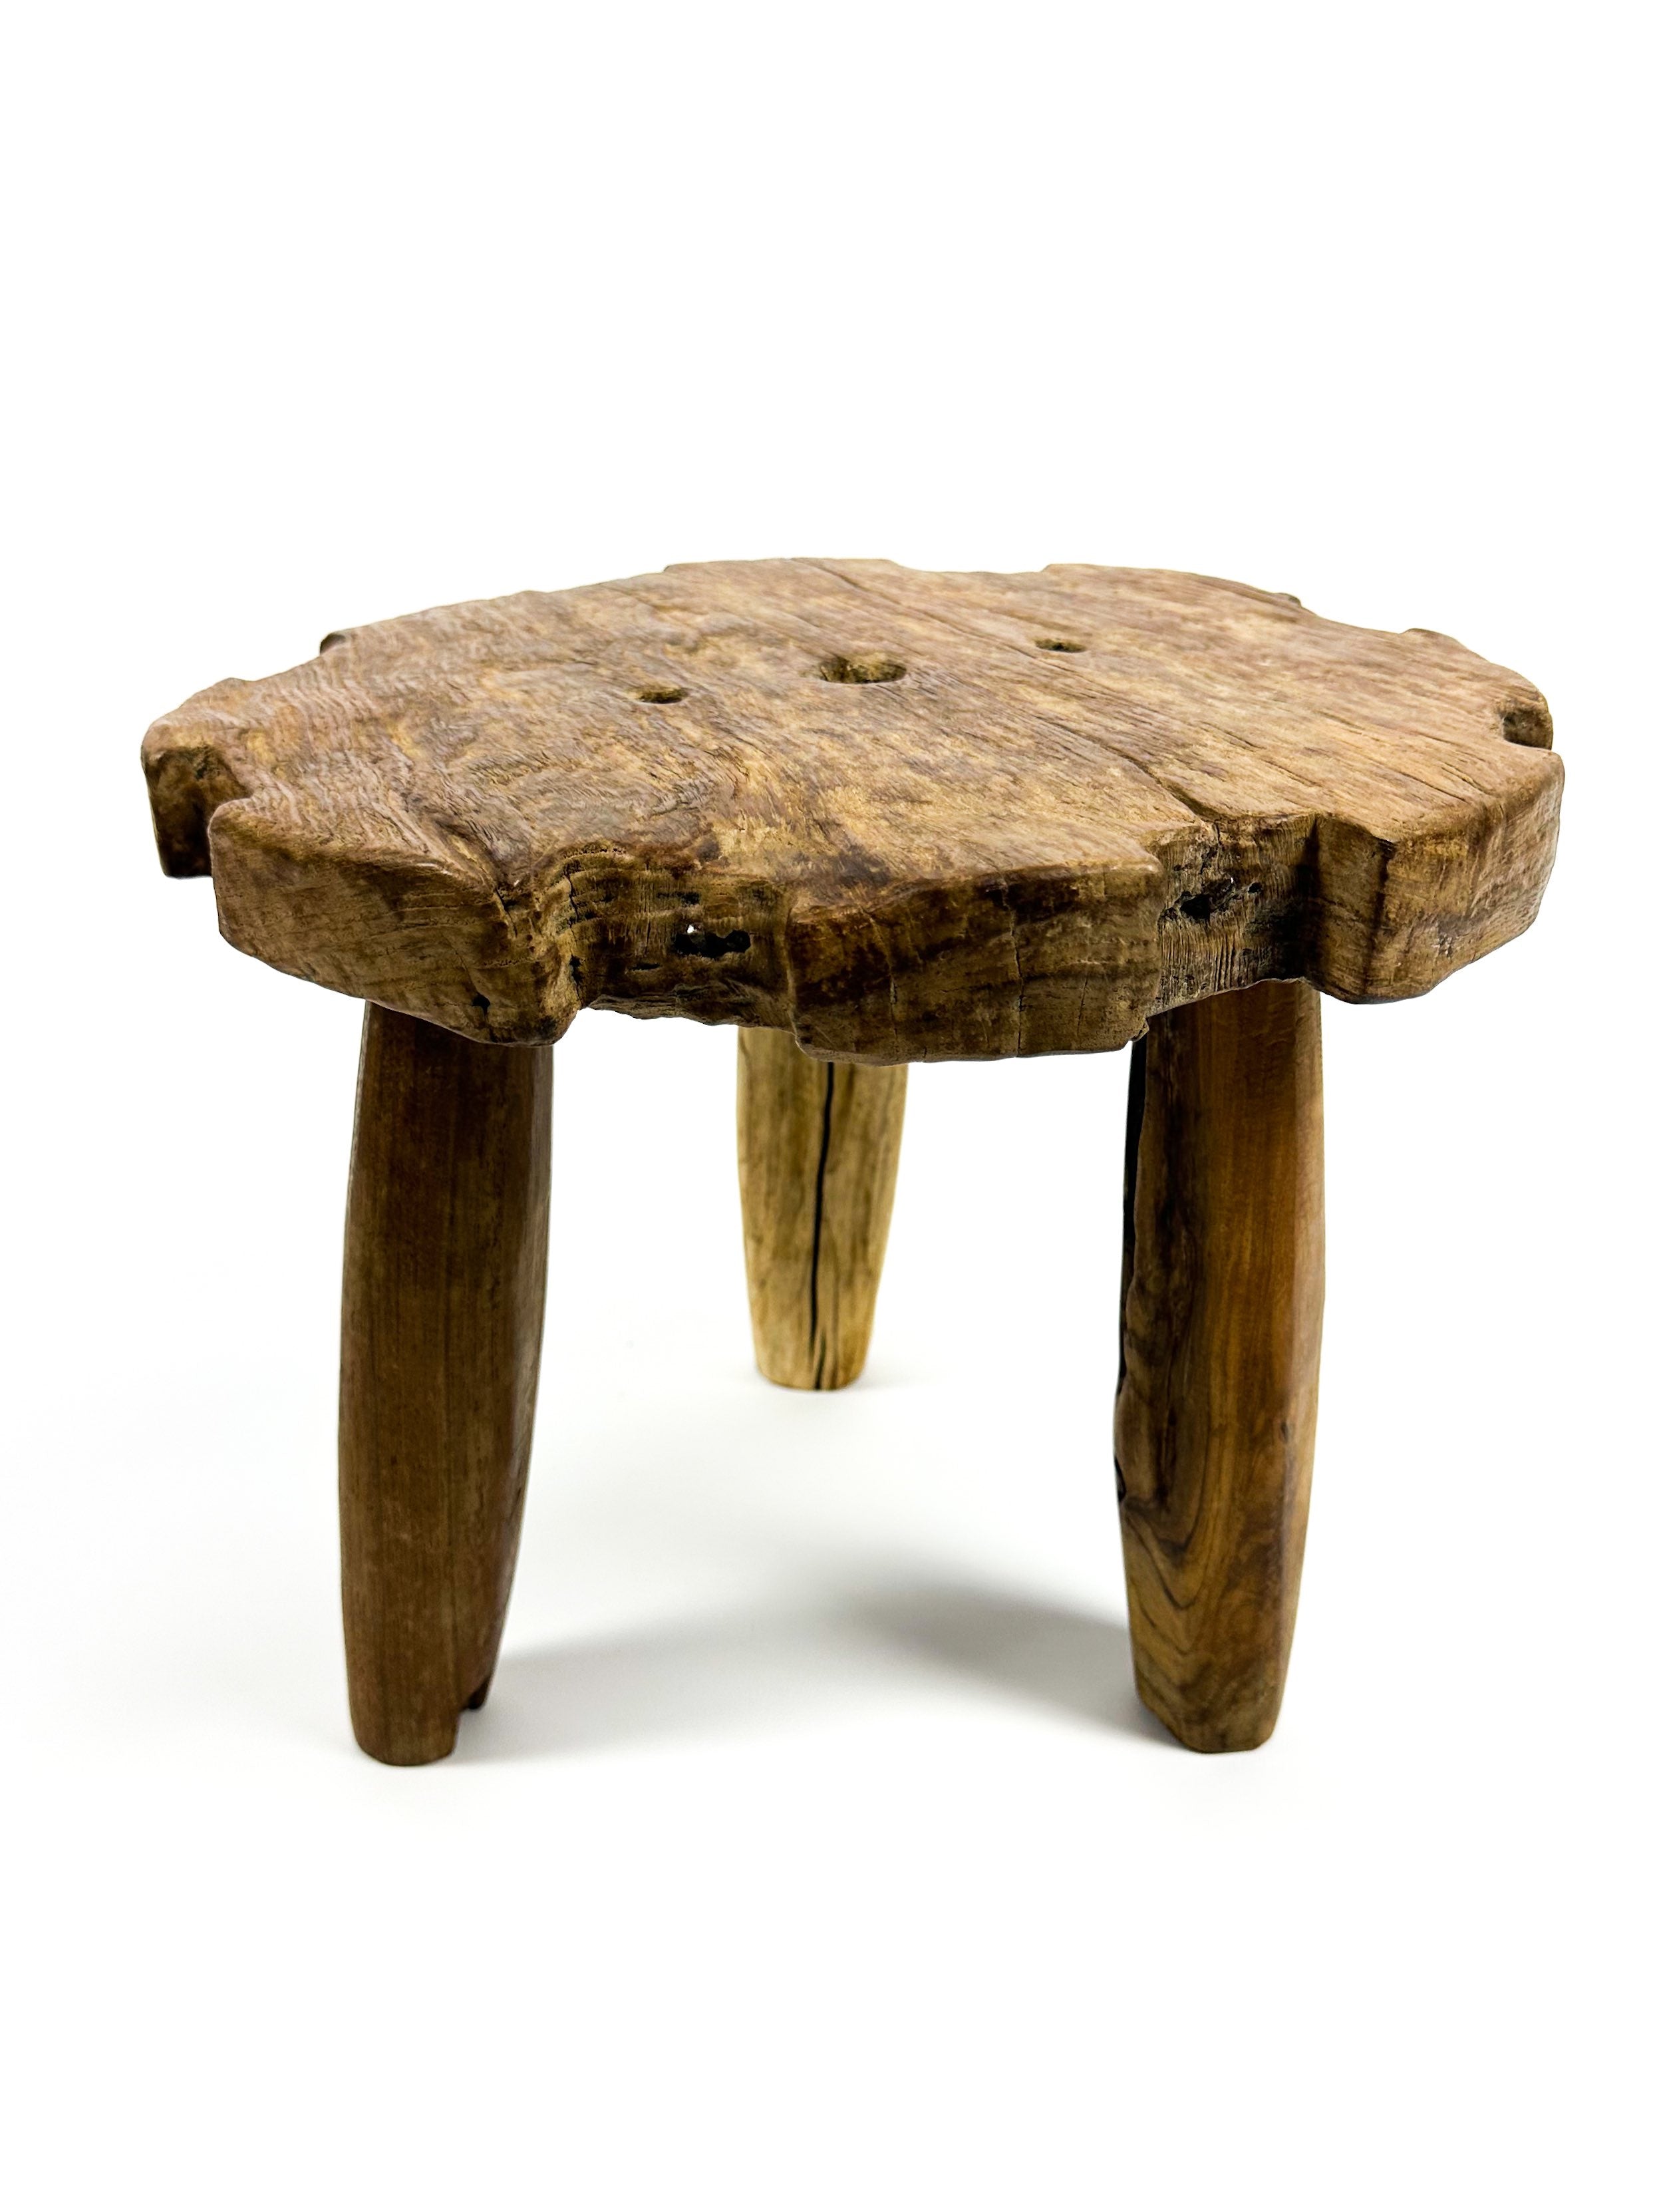 The mini teak 3-legged stool